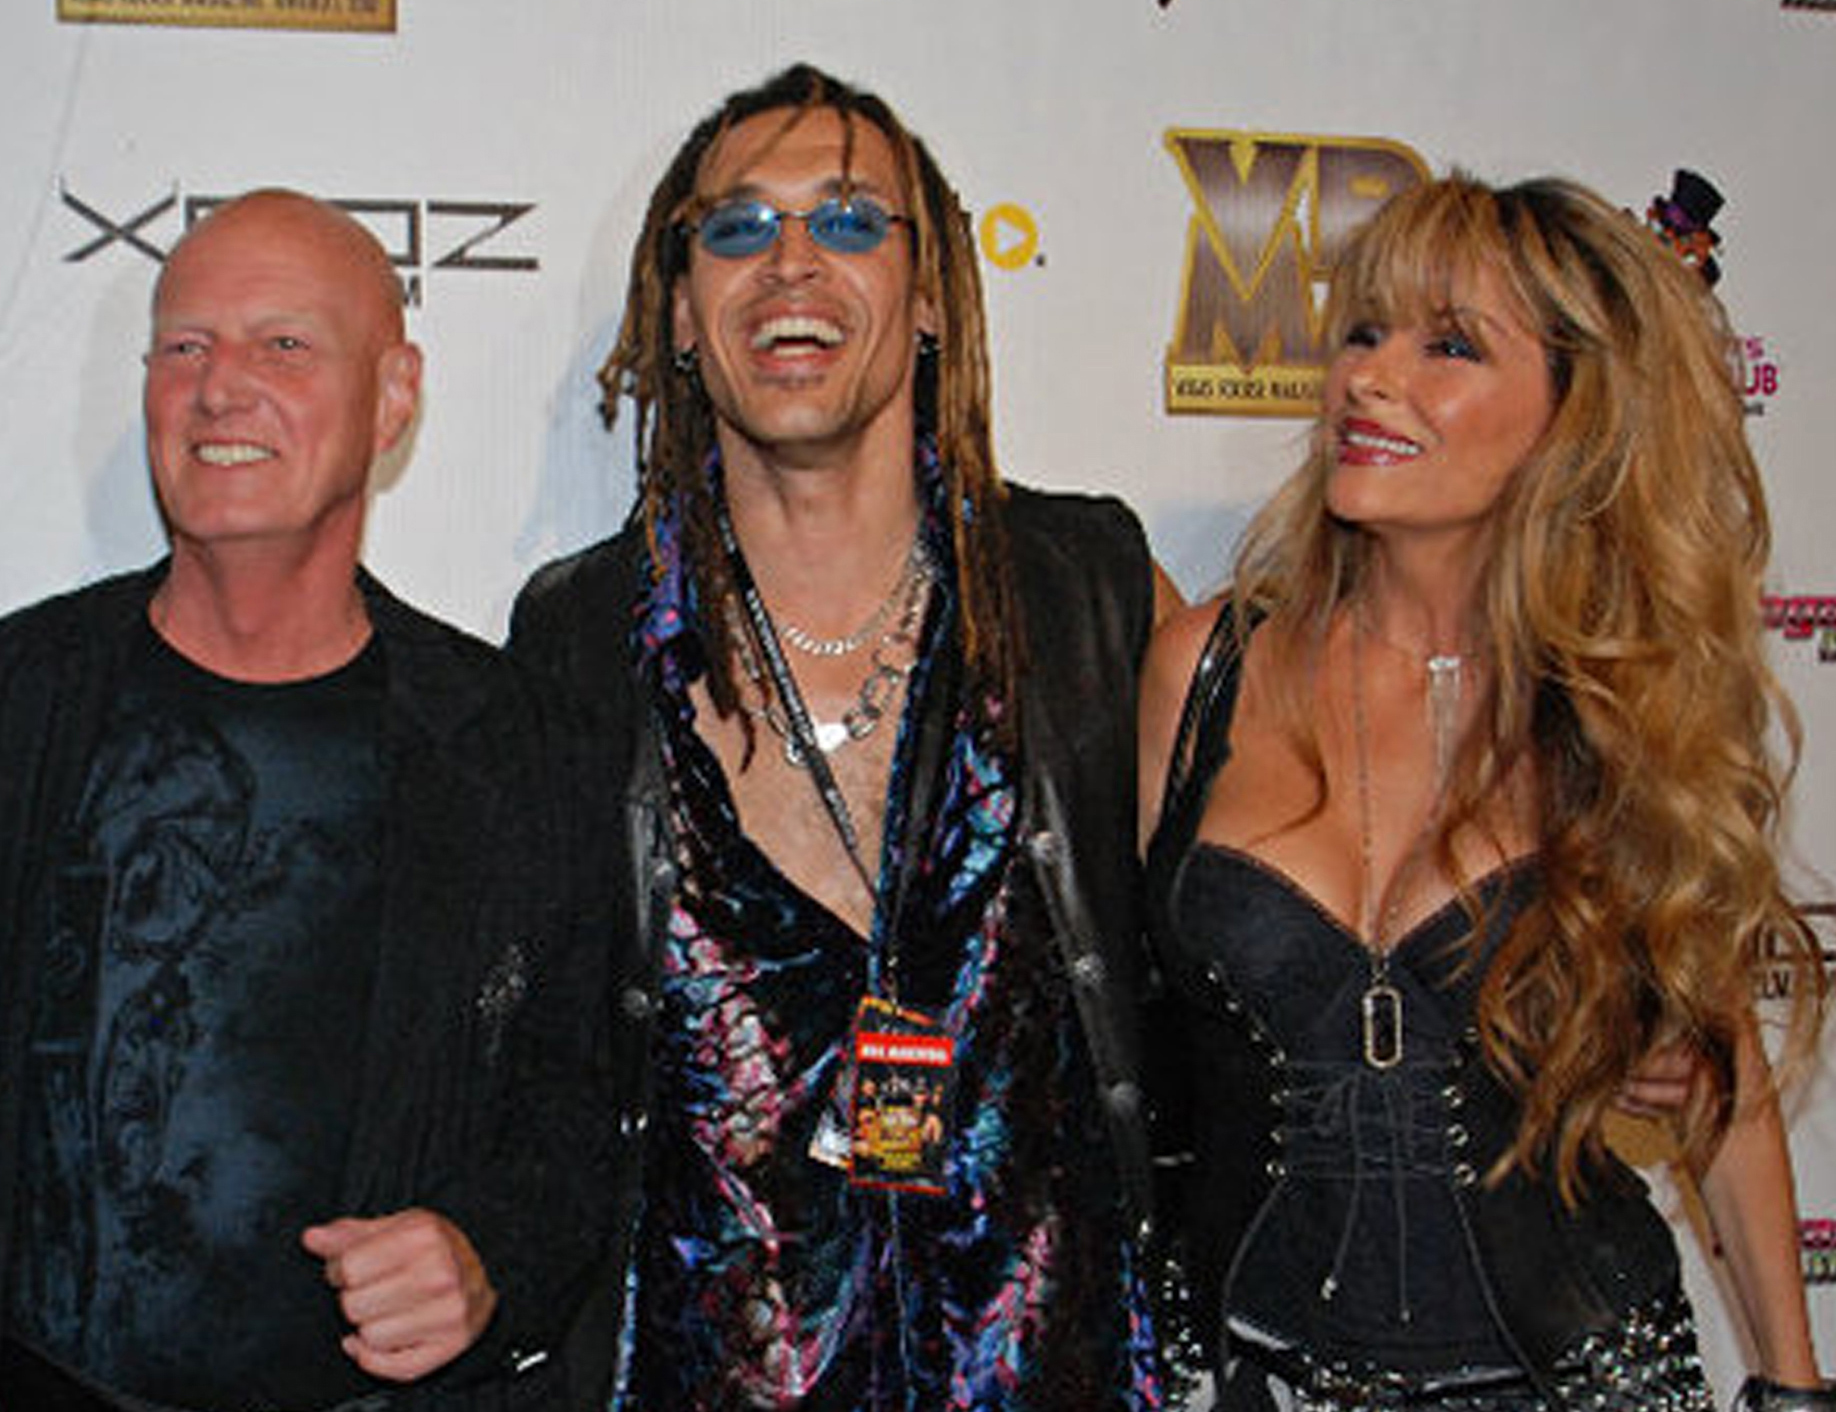 Drumming Legend Chris Slade from AC/DC, Jason Ebs, & Janea Ebs from rock band ECOTONIC on the red carpet @ VegasRocks Magazine Awards Las Vegas Hilton